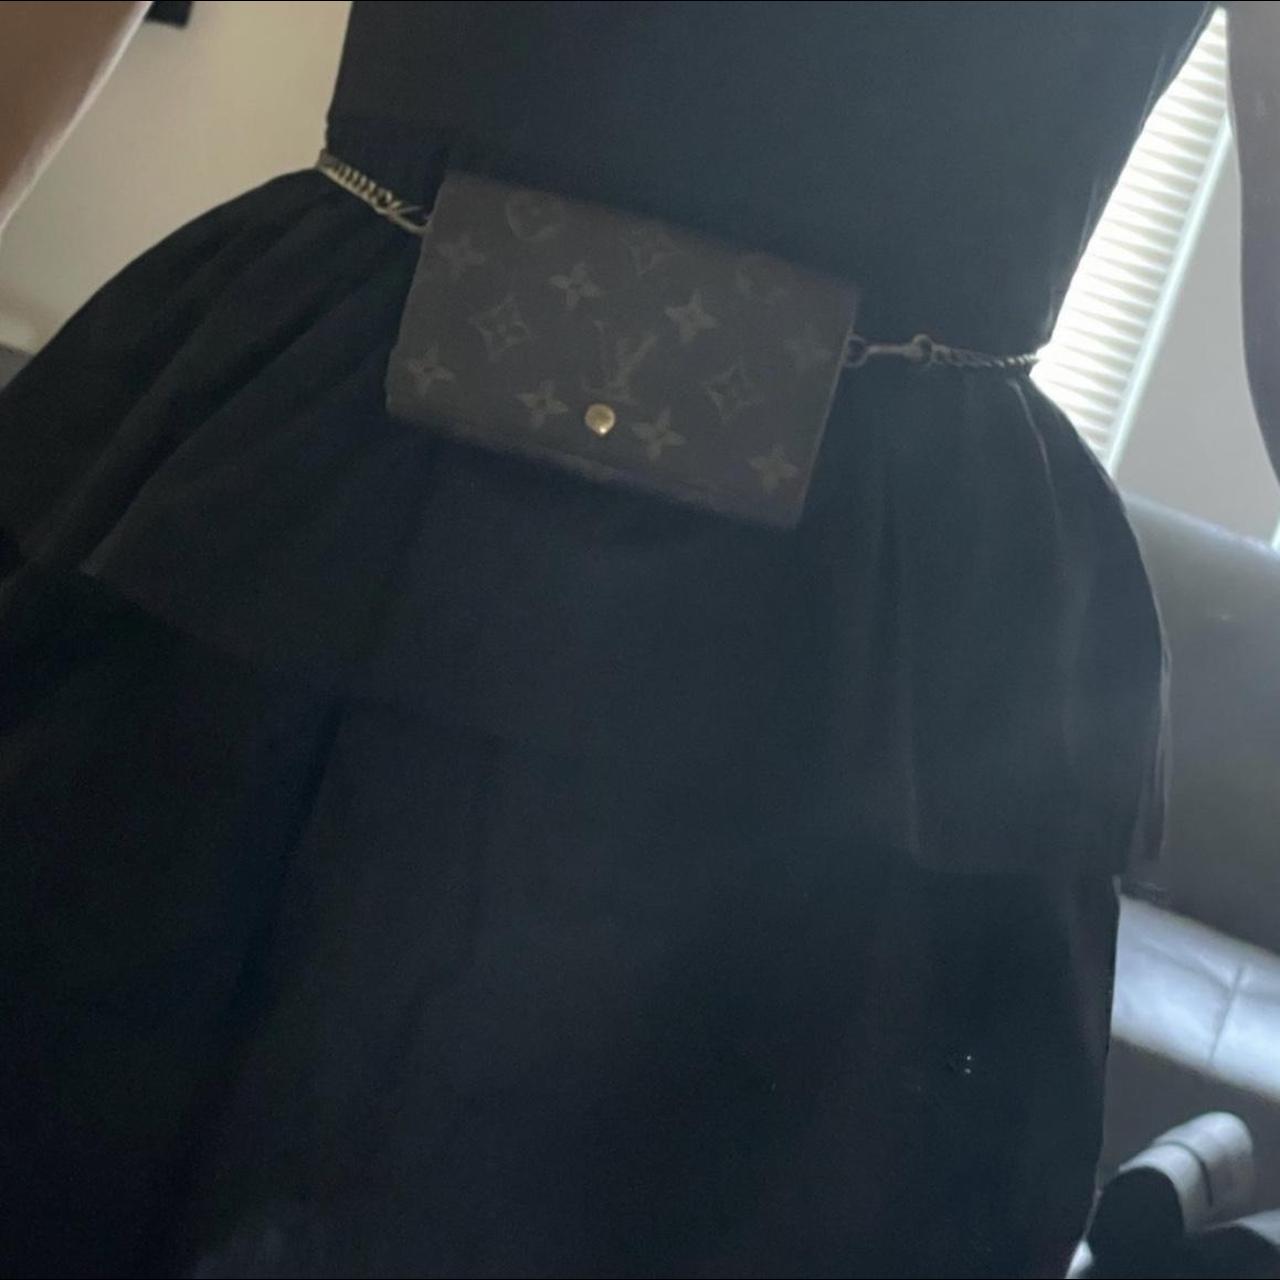 Louis Vuitton wallet -little wear on the stitching, - Depop